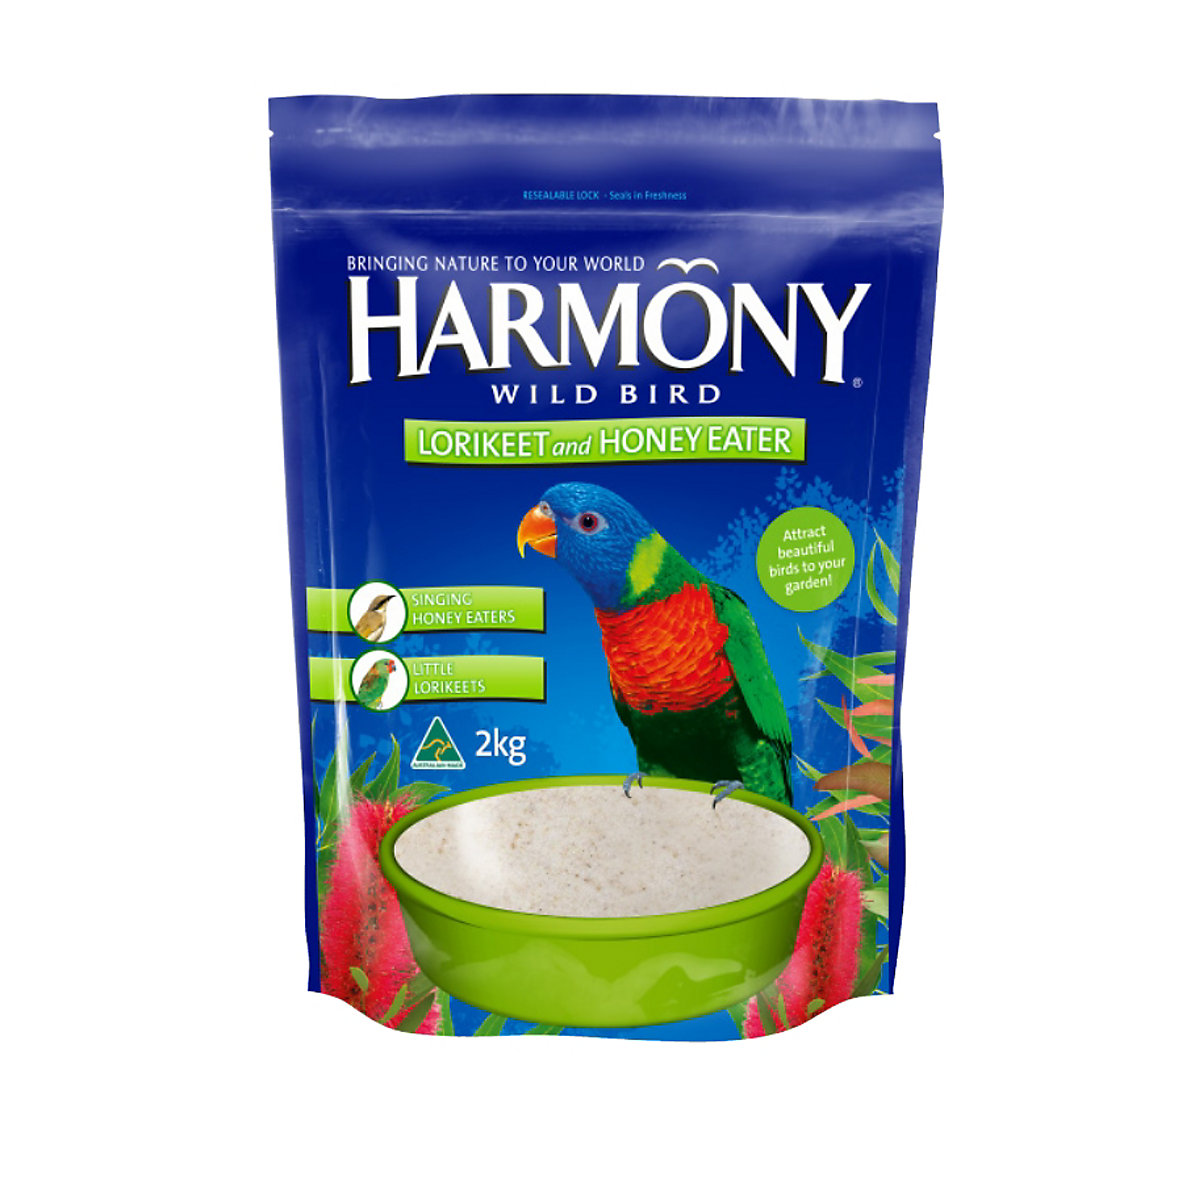 $17 Save $5 Harmony Lorikeet and Honey Eater Bird Feed 2kg